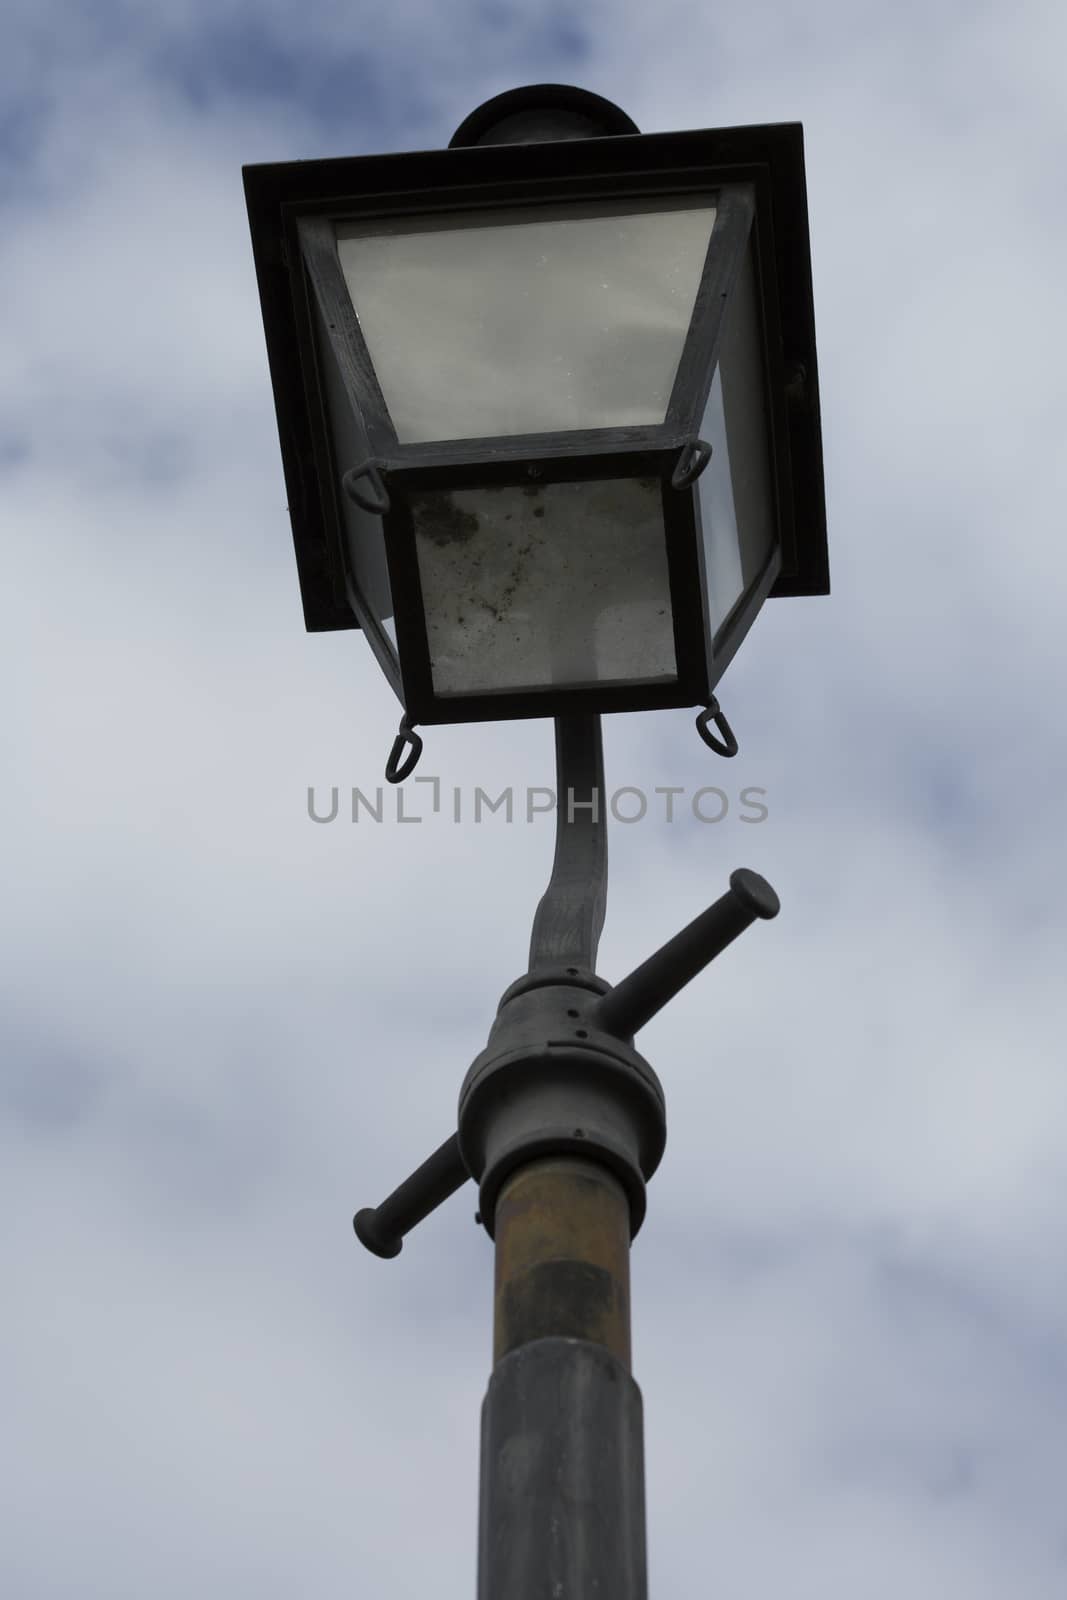 Antique Street Lamp by tornado98